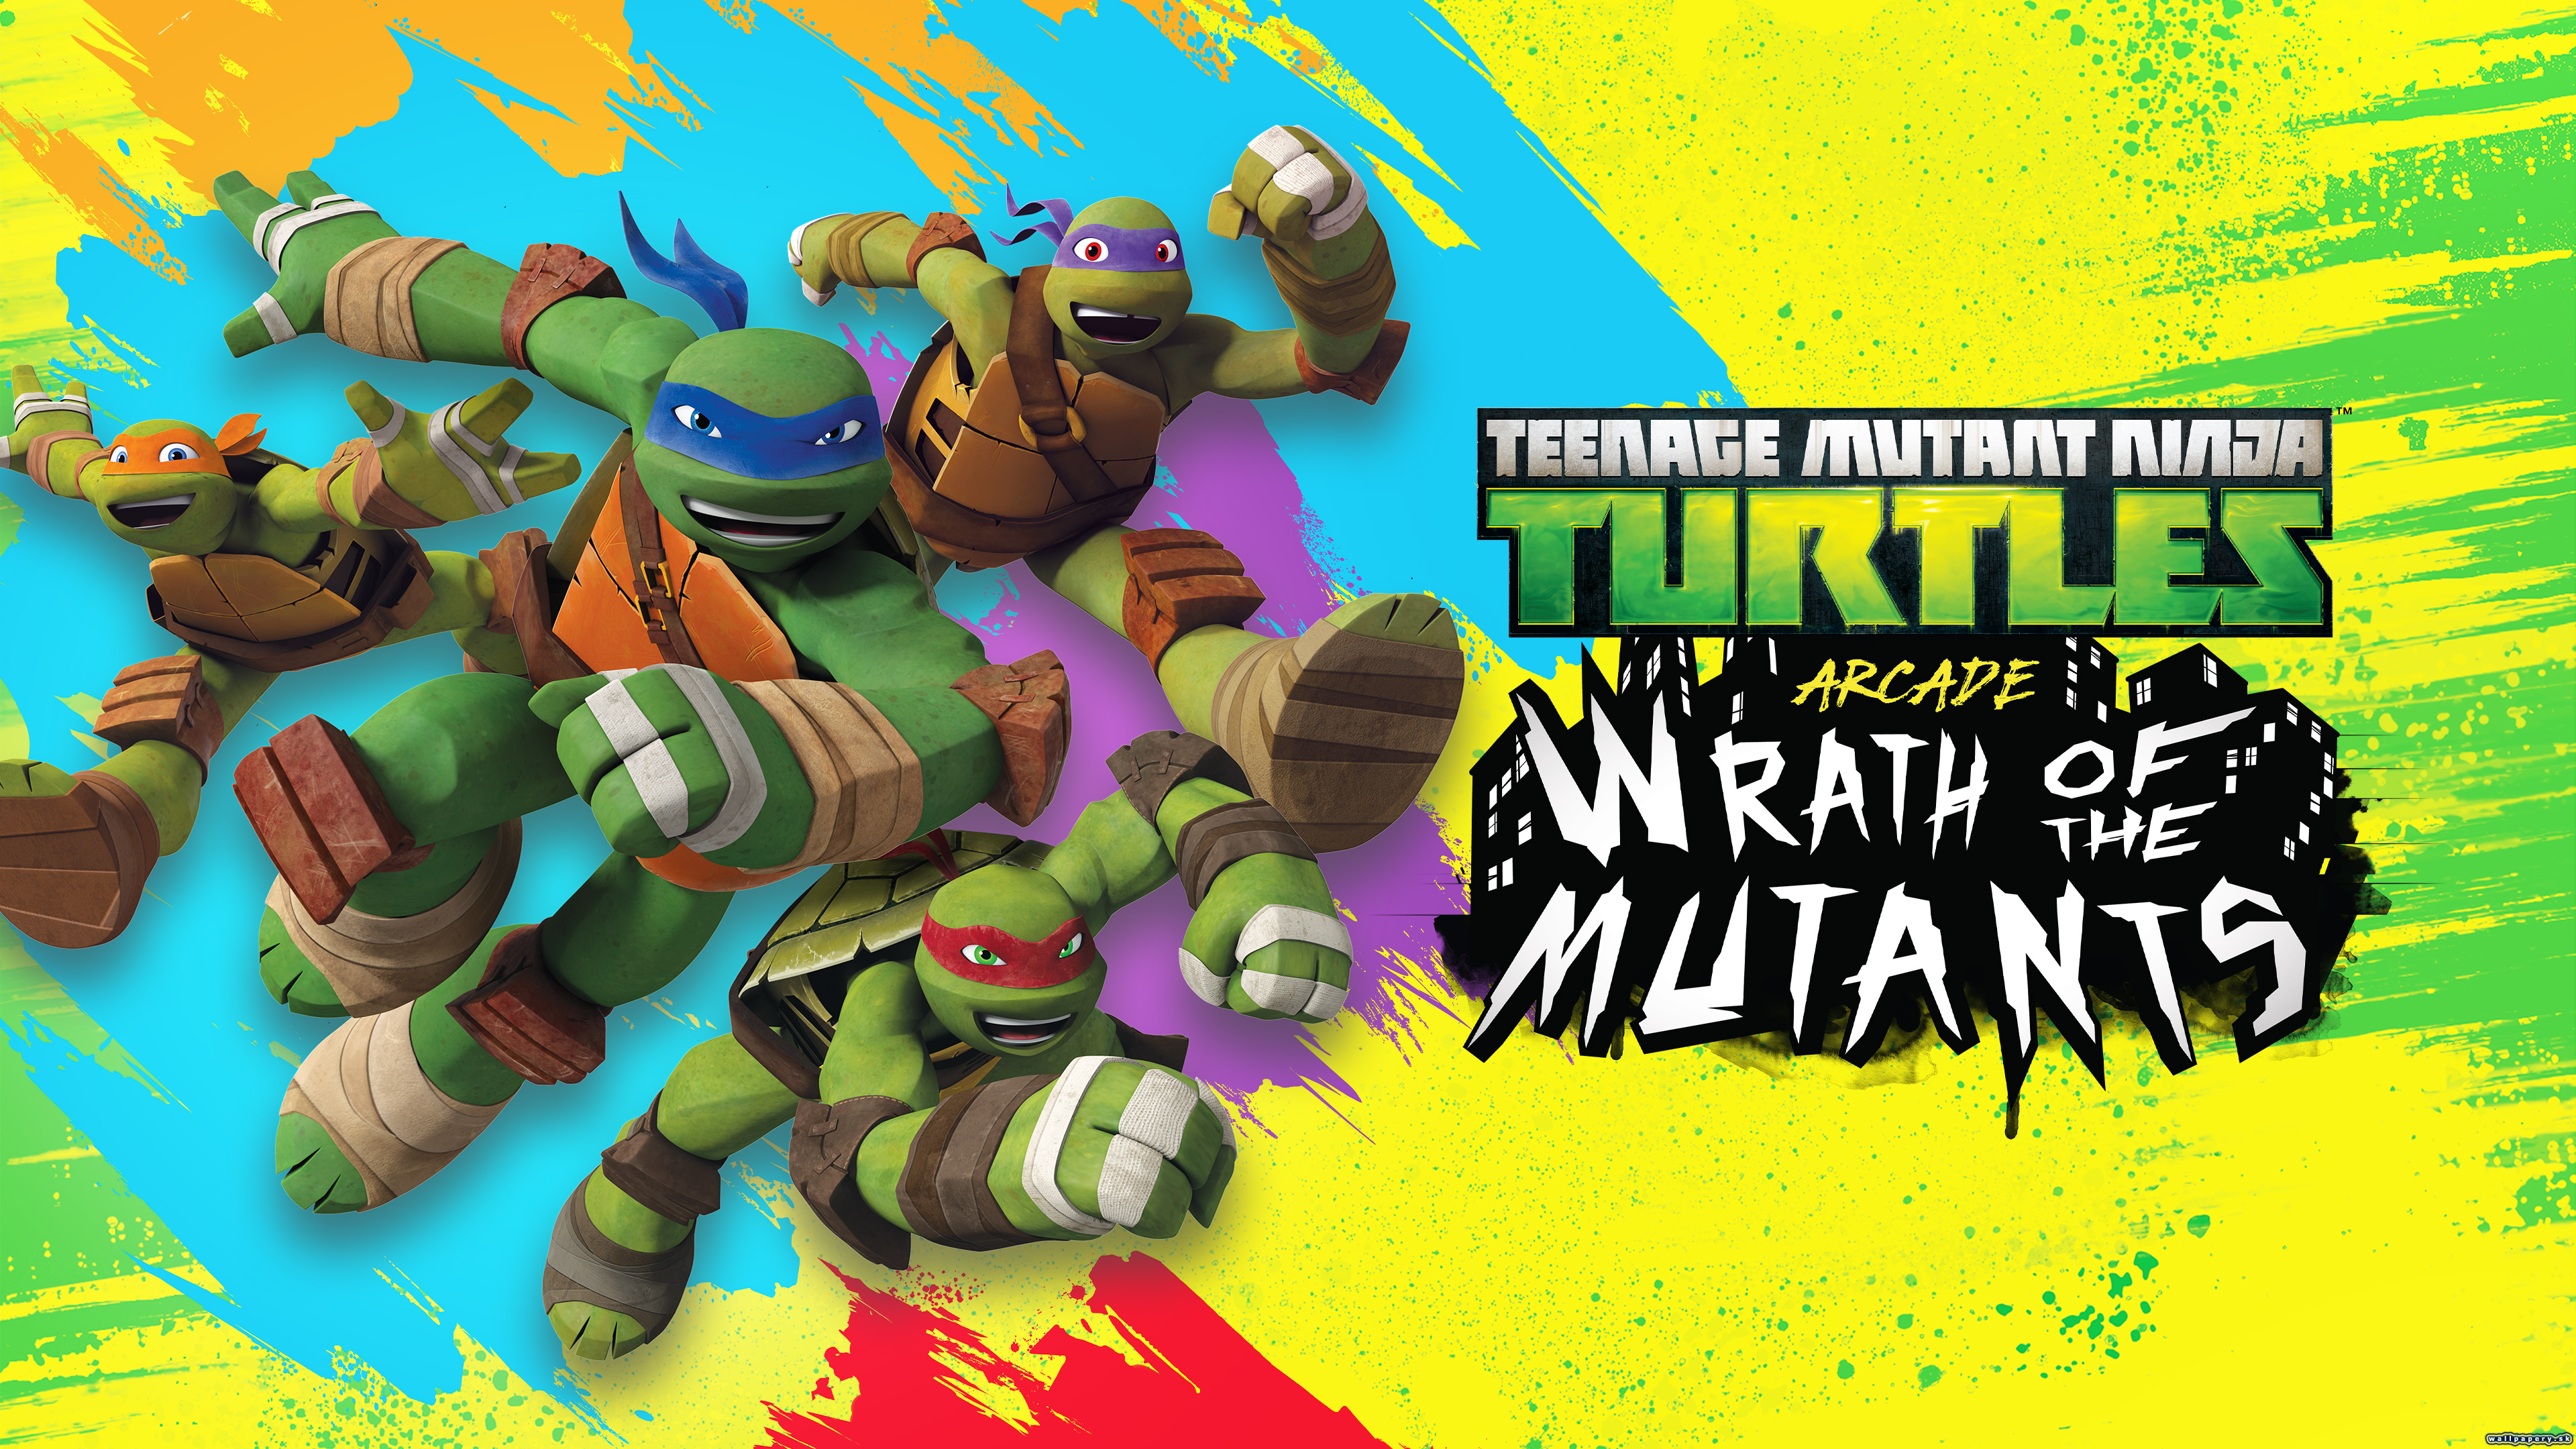 Teenage Mutant Ninja Turtles Arcade: Wrath of the Mutants - wallpaper 1